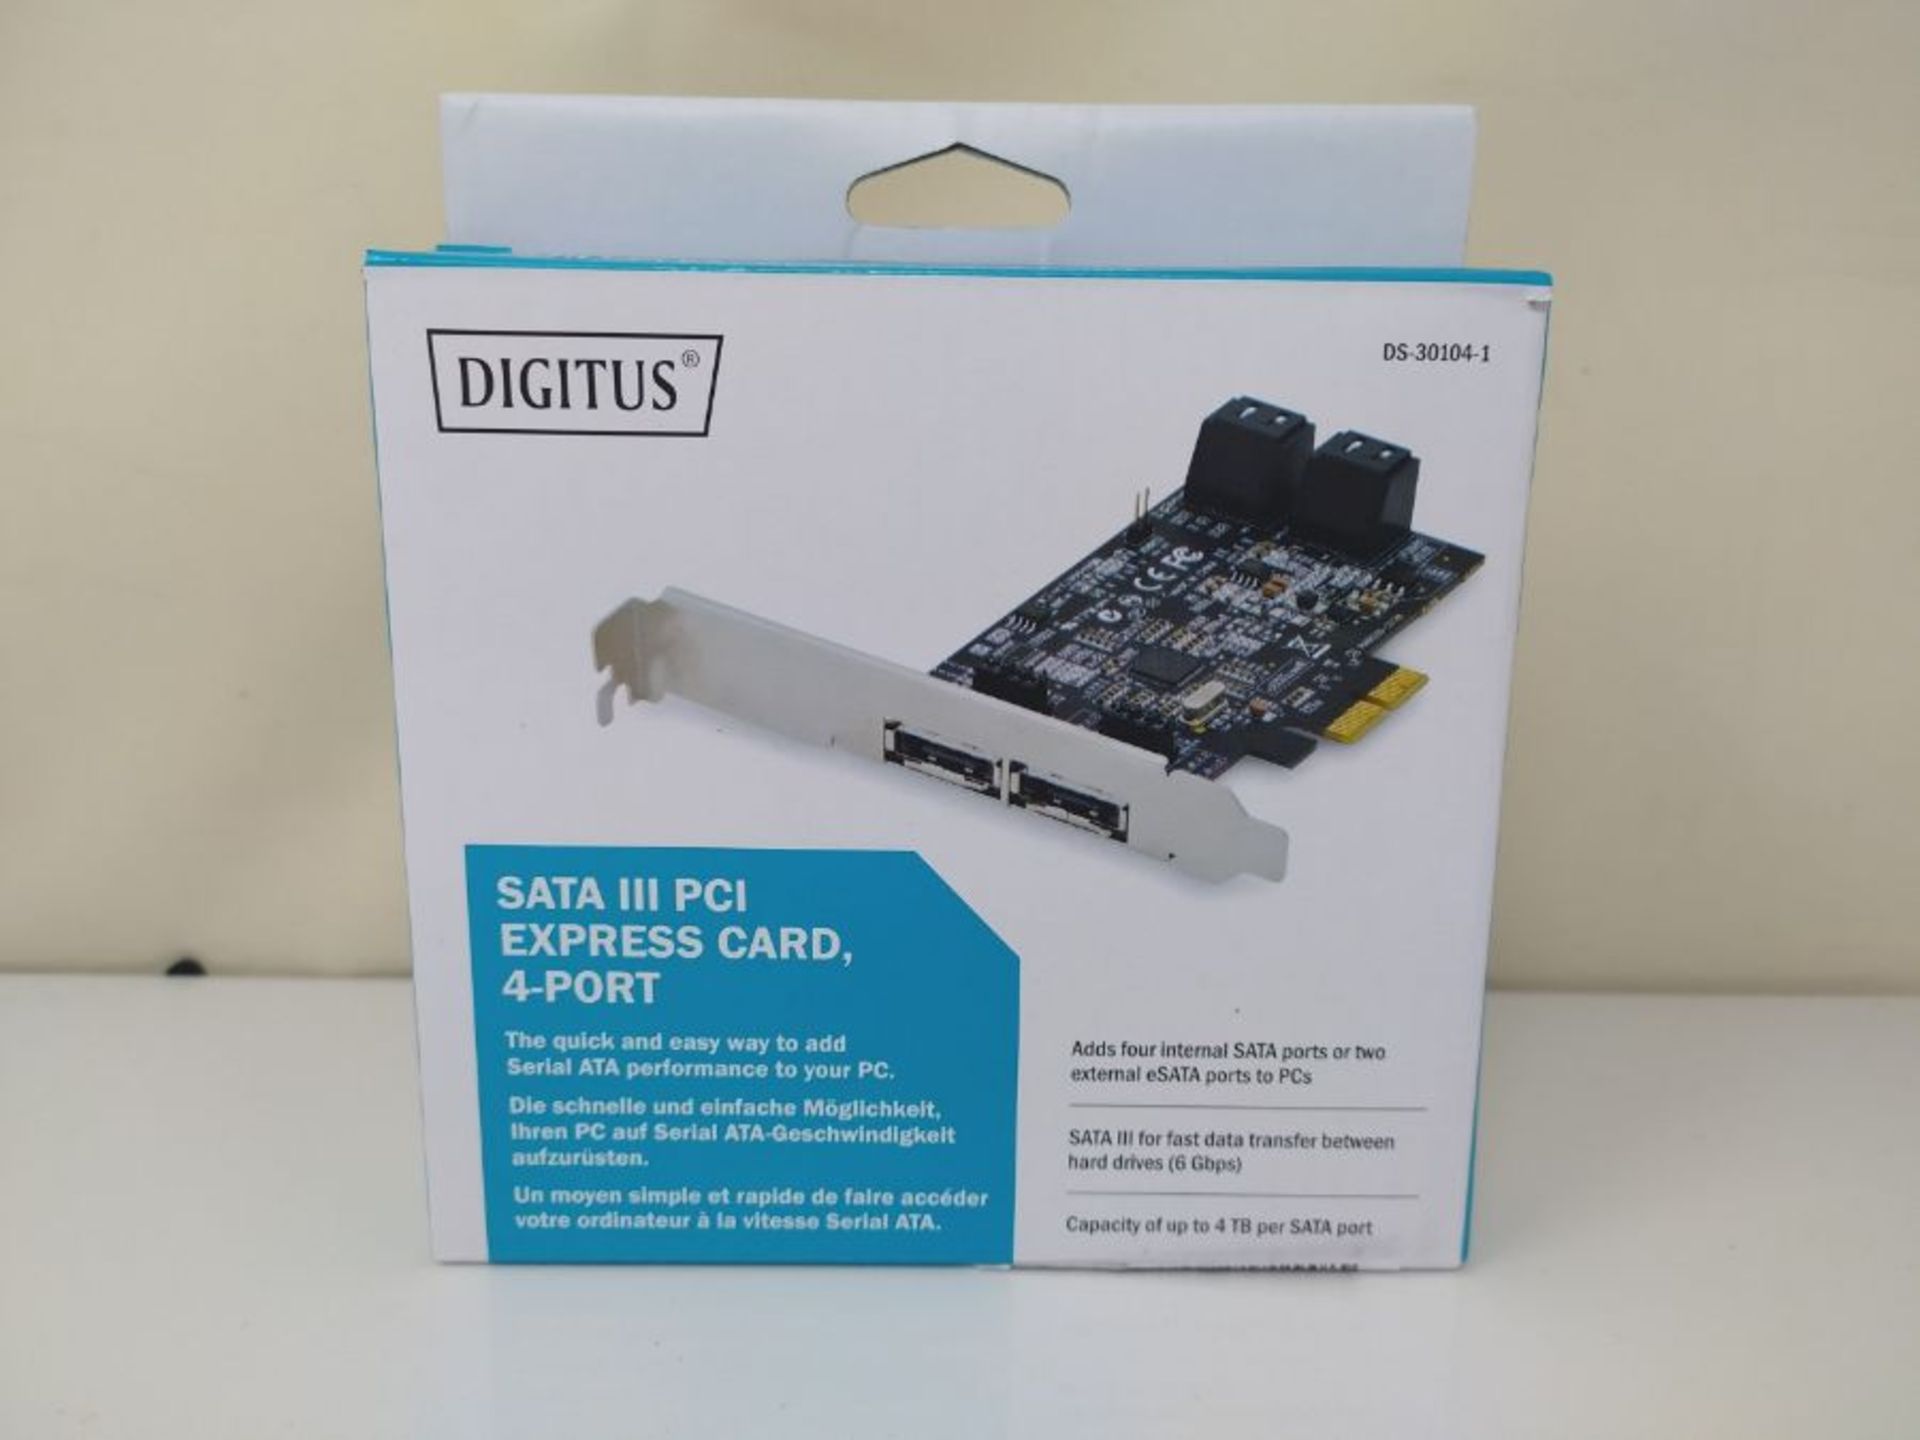 RRP £53.00 Digitus 4 Port SATA III PCI Express Card, DS-30104-1 - Image 2 of 3